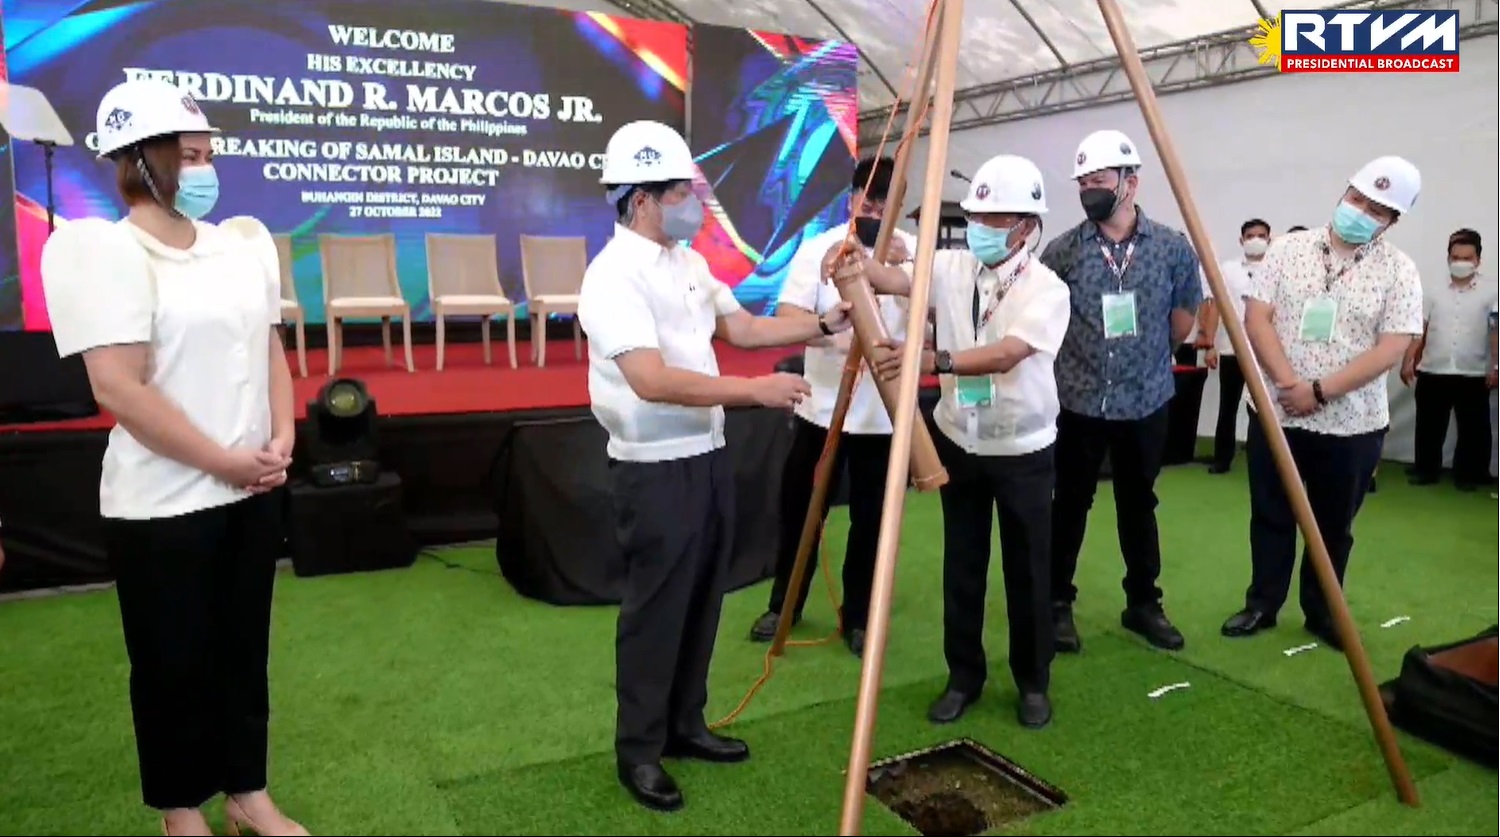 Groundbreaking of Samal Island-Davao City Connector (SIDC) Project